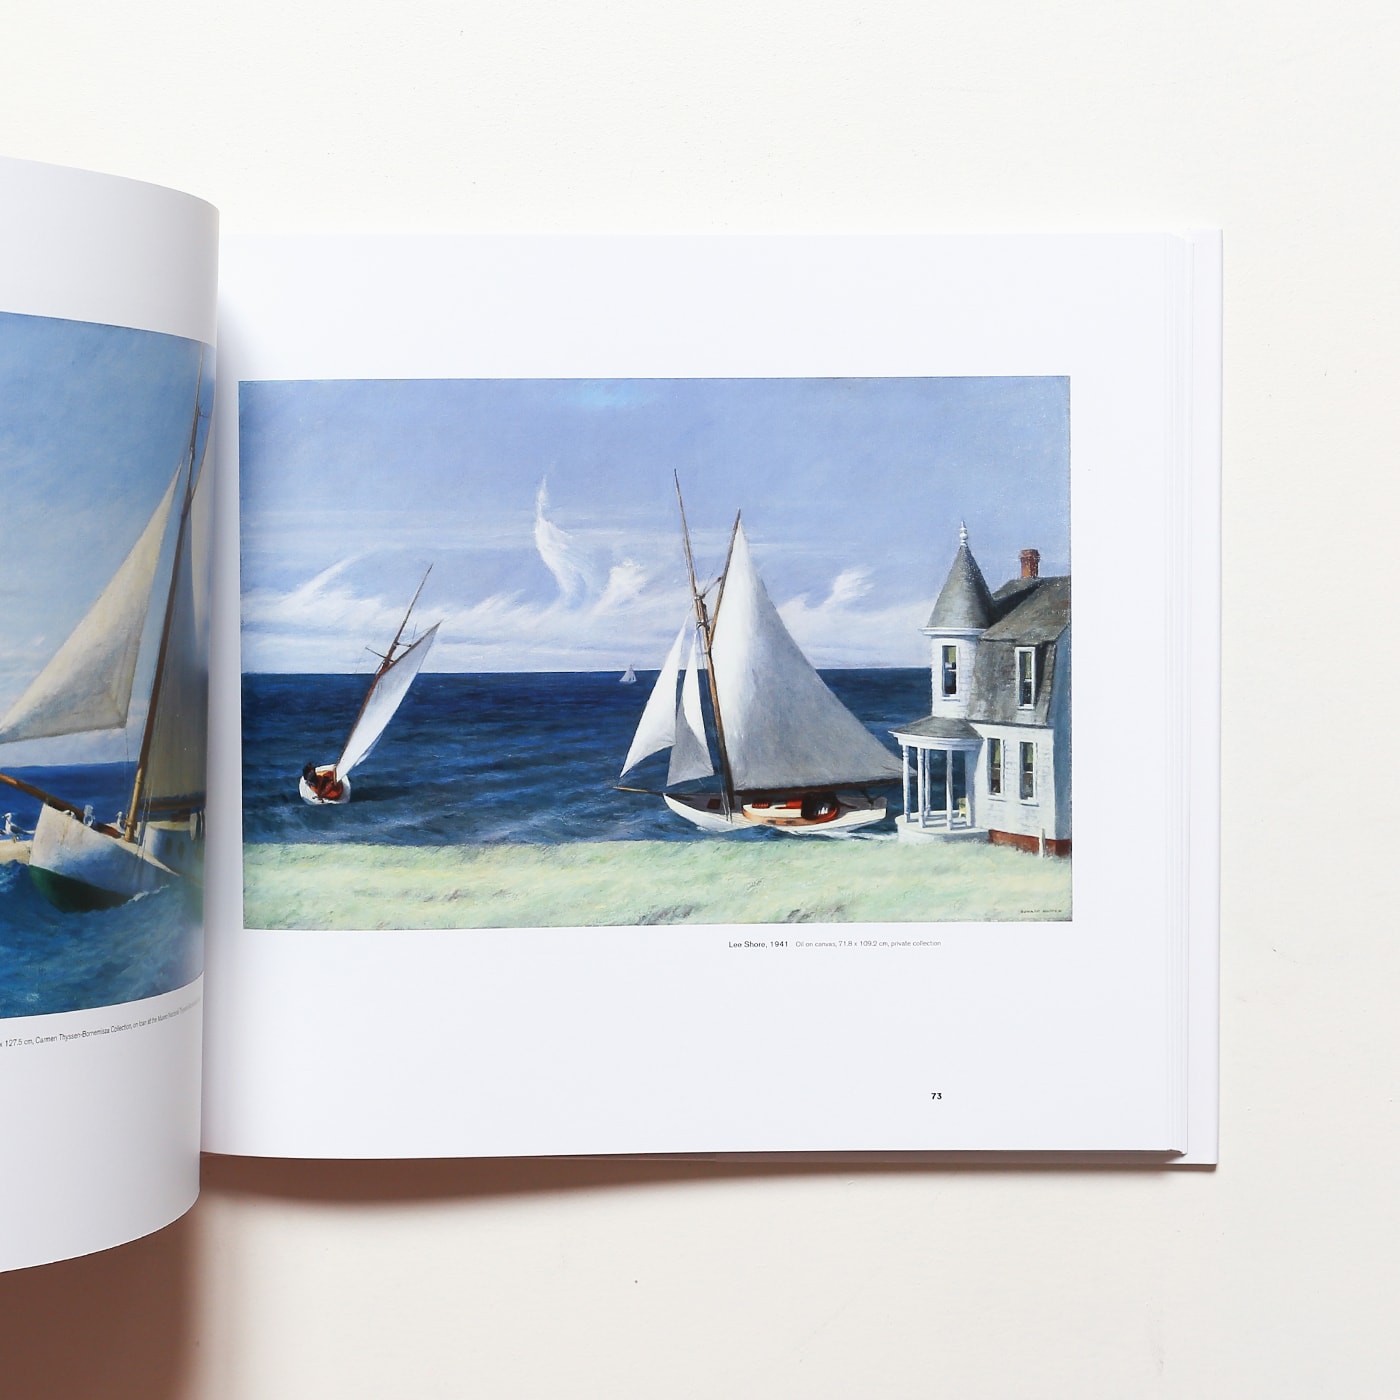 Edward Hopper: A Fresh Look at Landscape